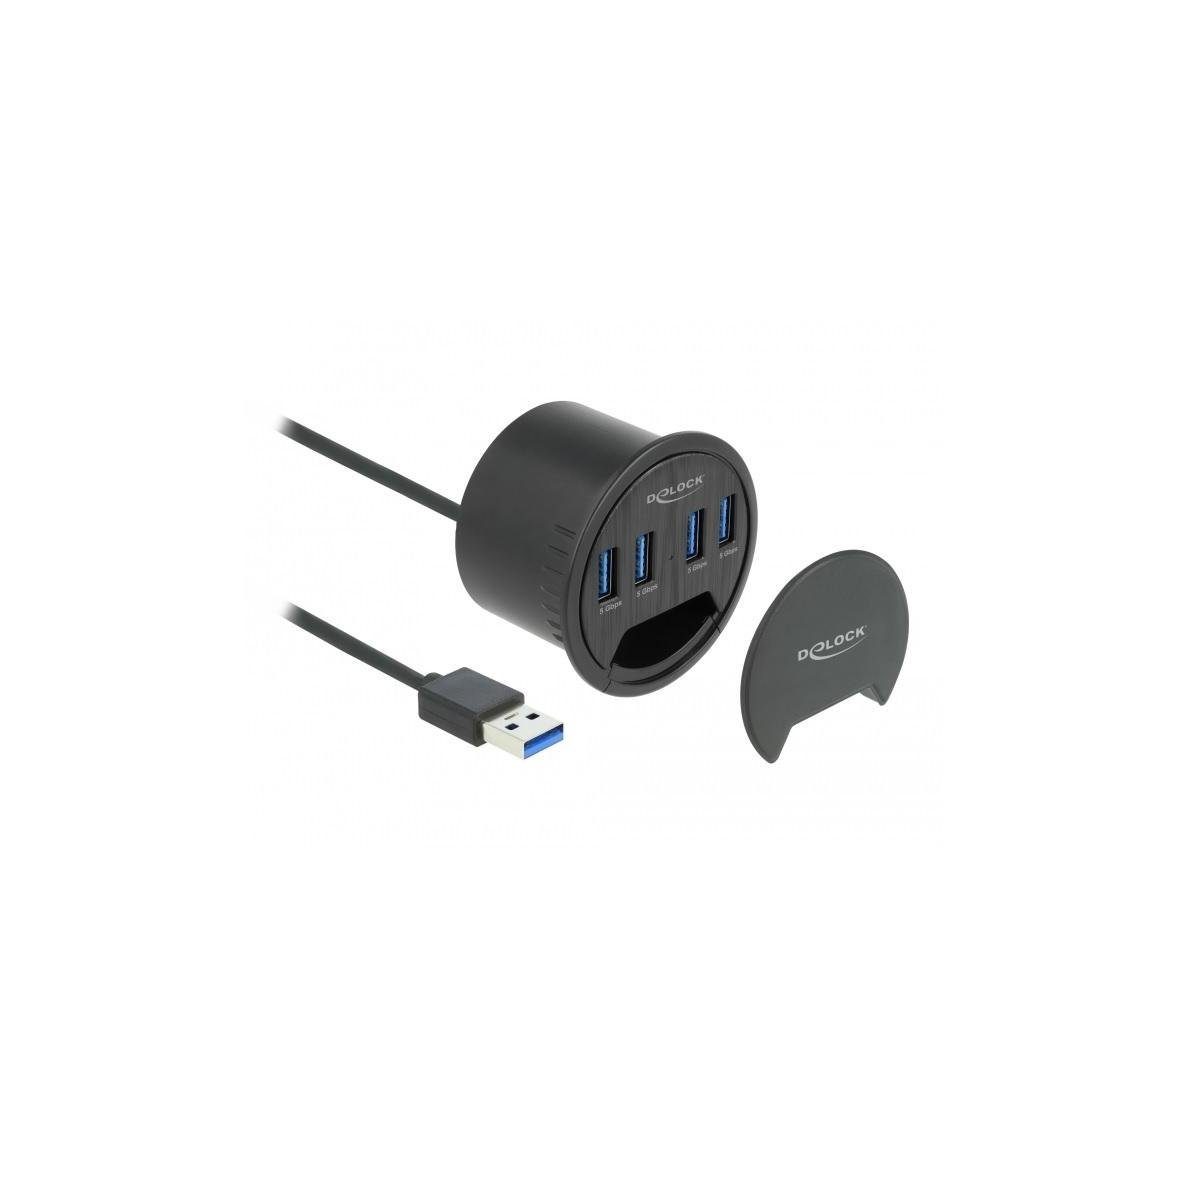 USB 2.0 HUB 3-Port/Audio zum Einbau (60mm), 16,65 €